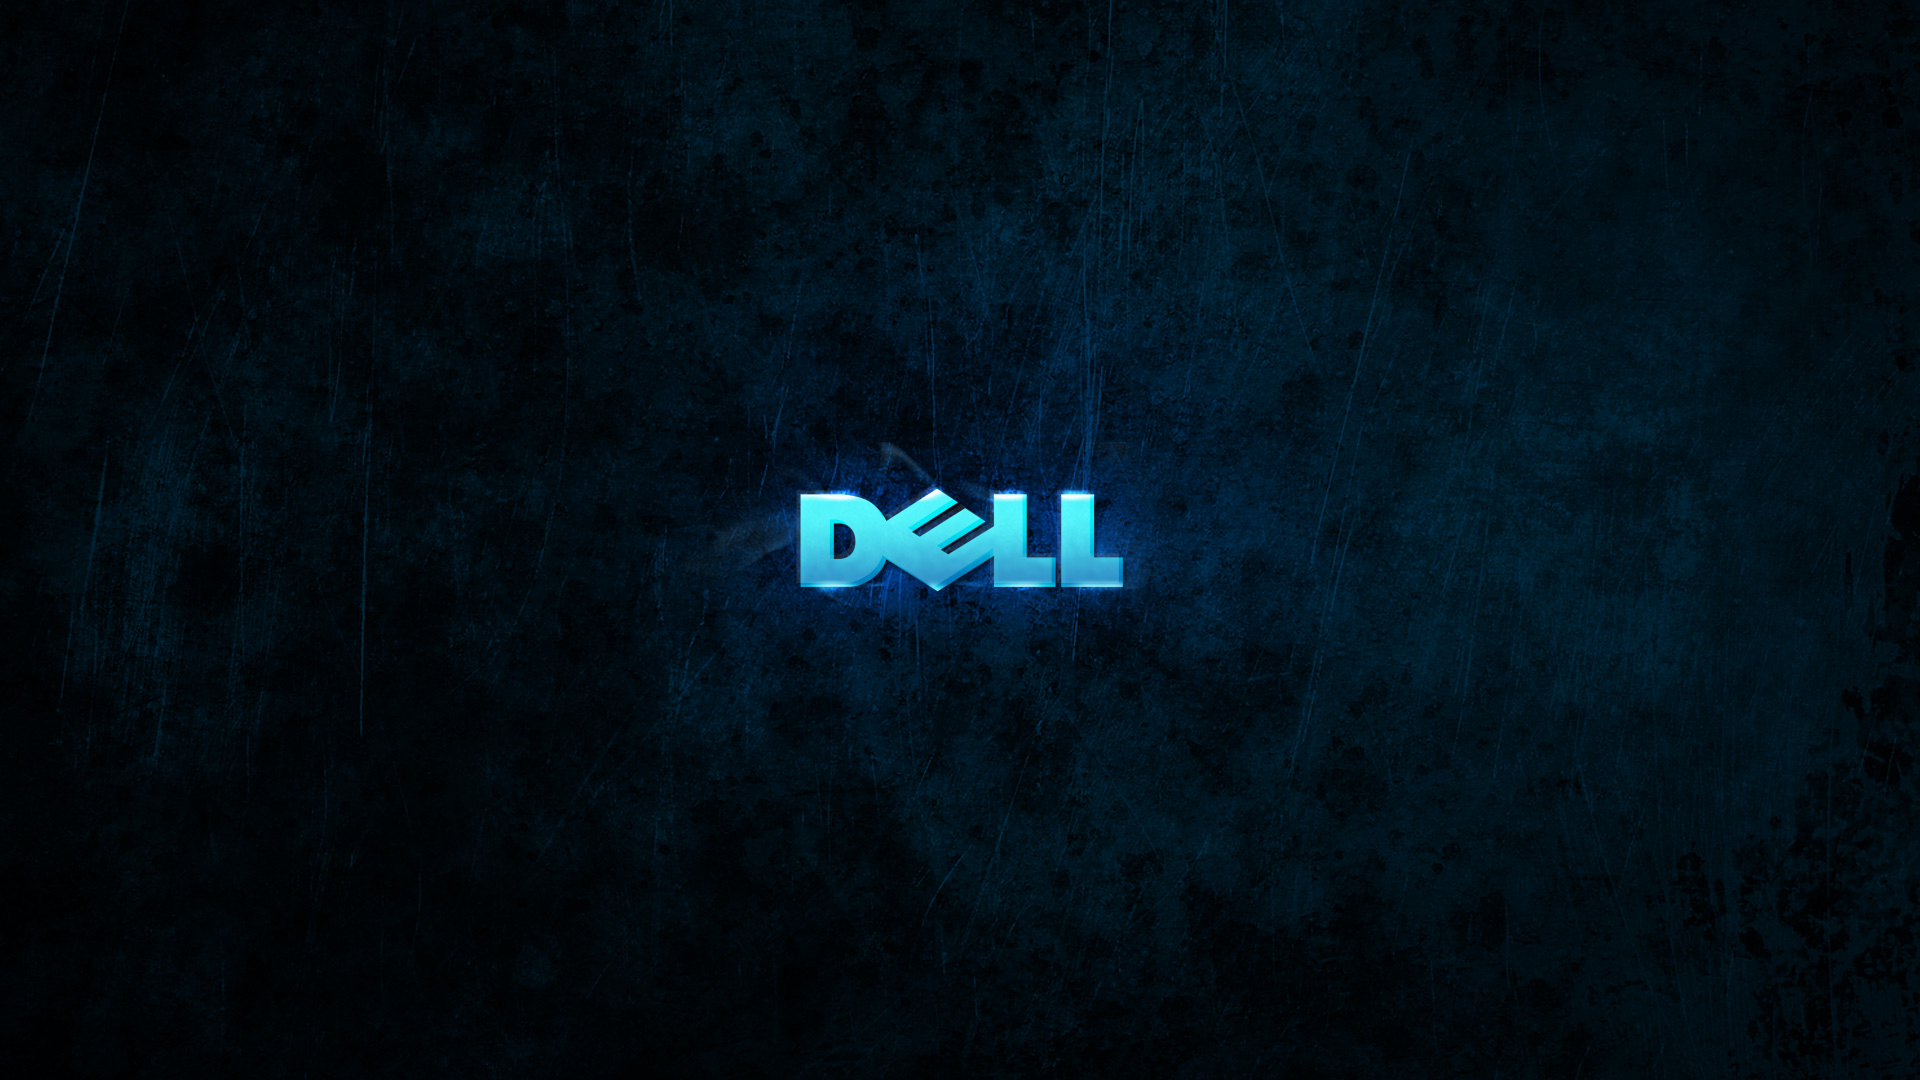 Dell Wallpaper HD